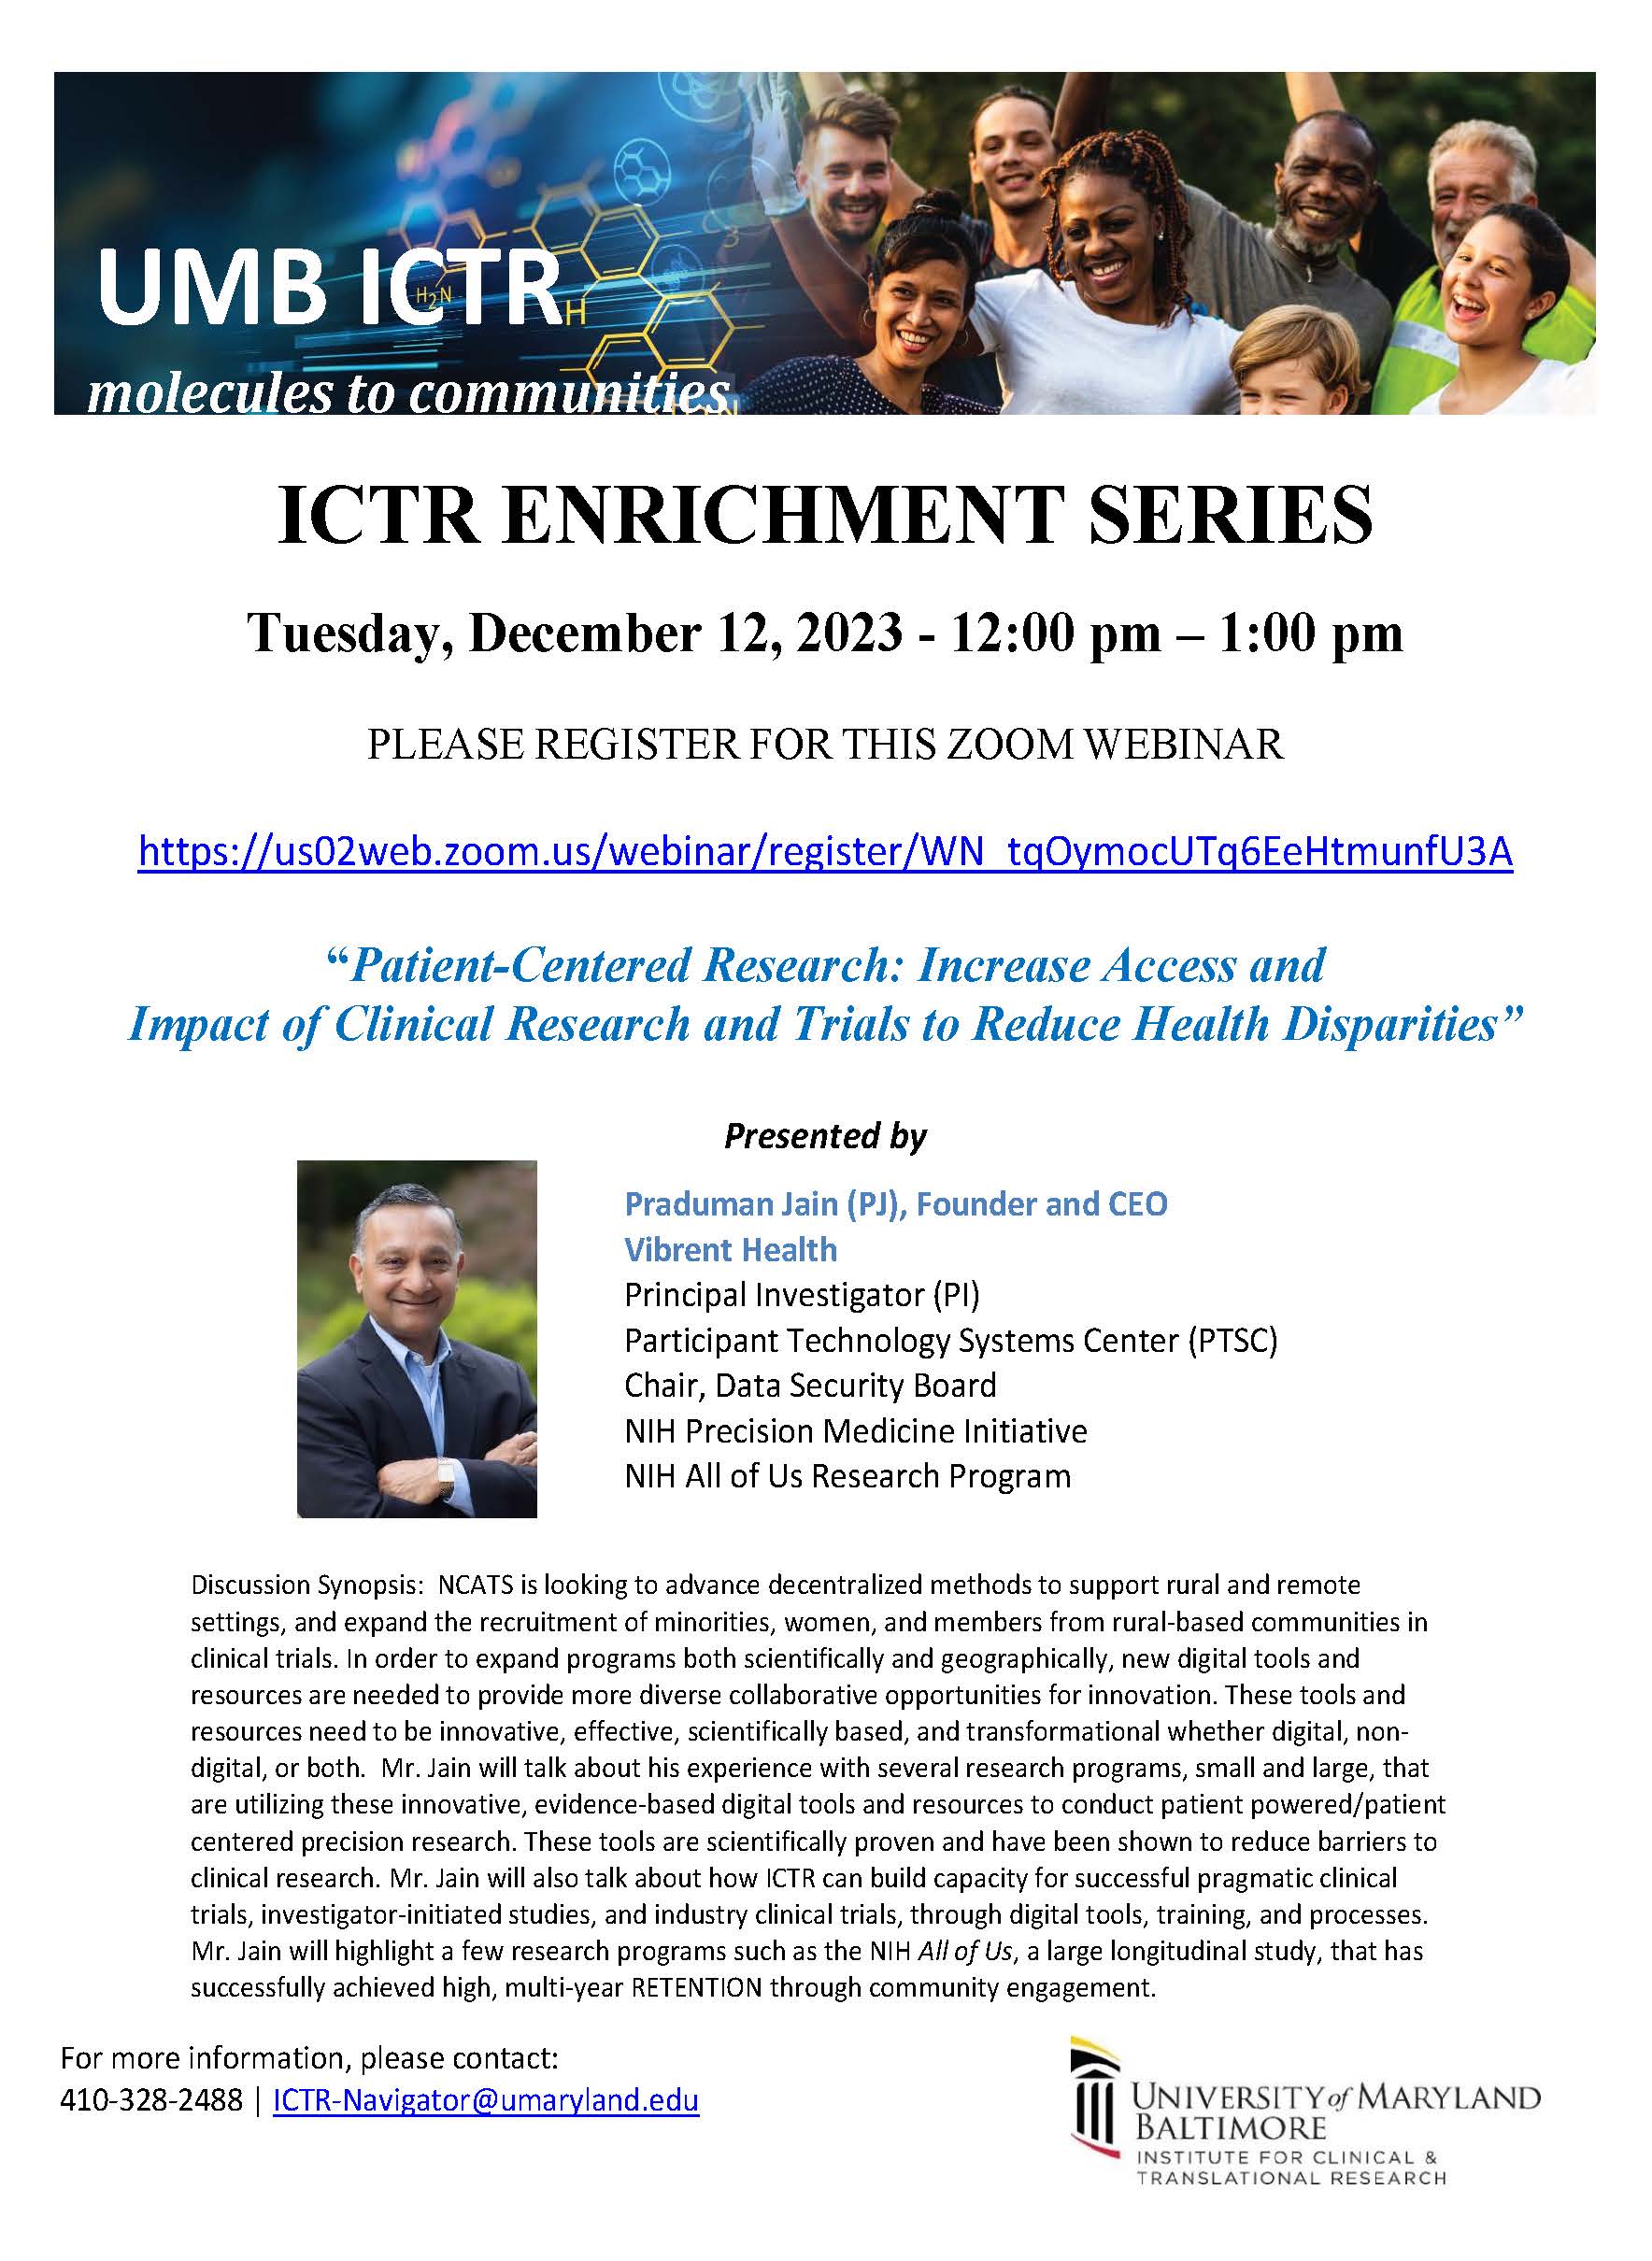 UMB ICTR Enrichment Series
